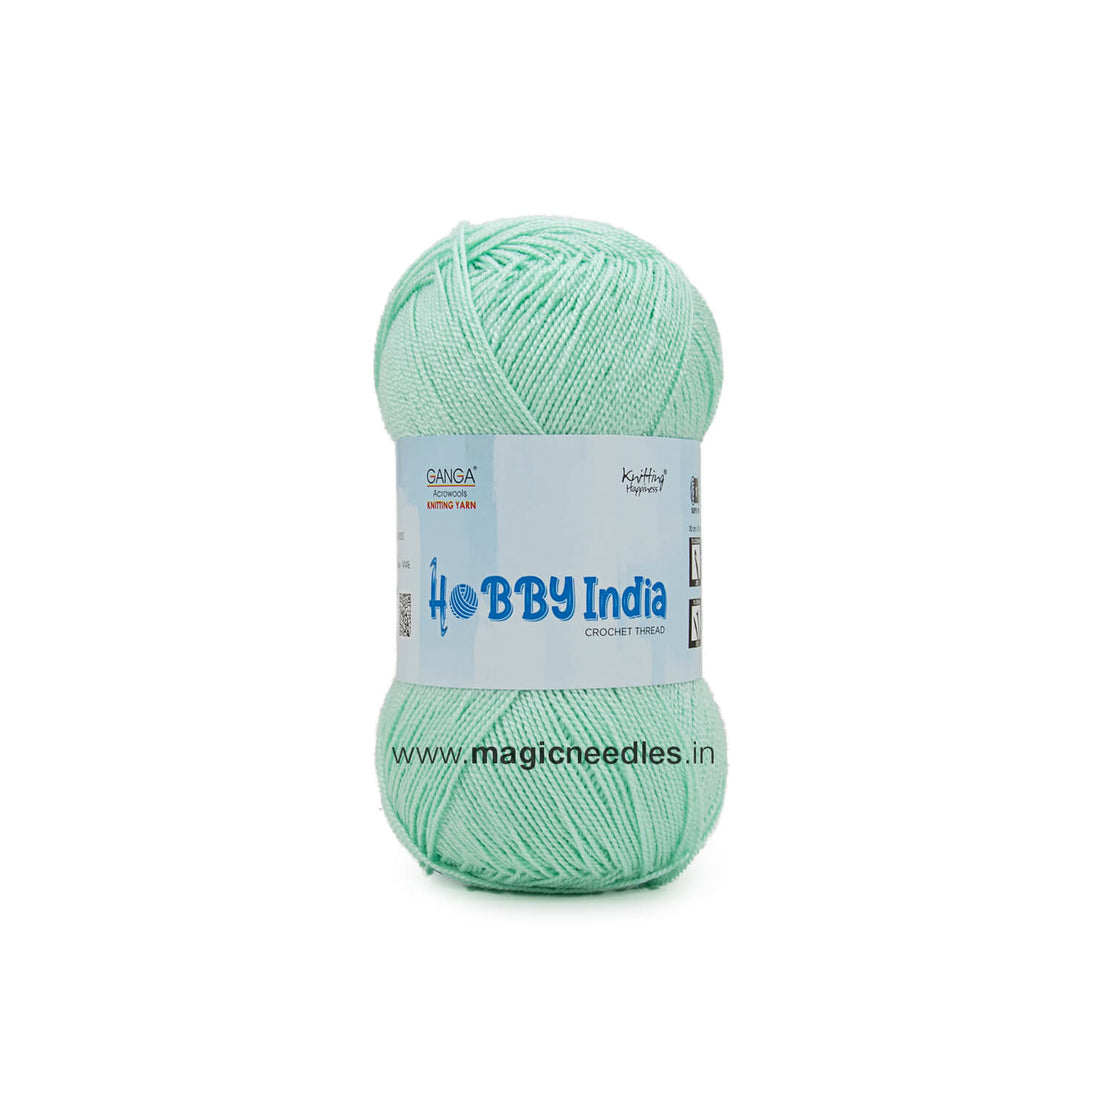 Ganga Hobby India Crochet Thread - Green 69